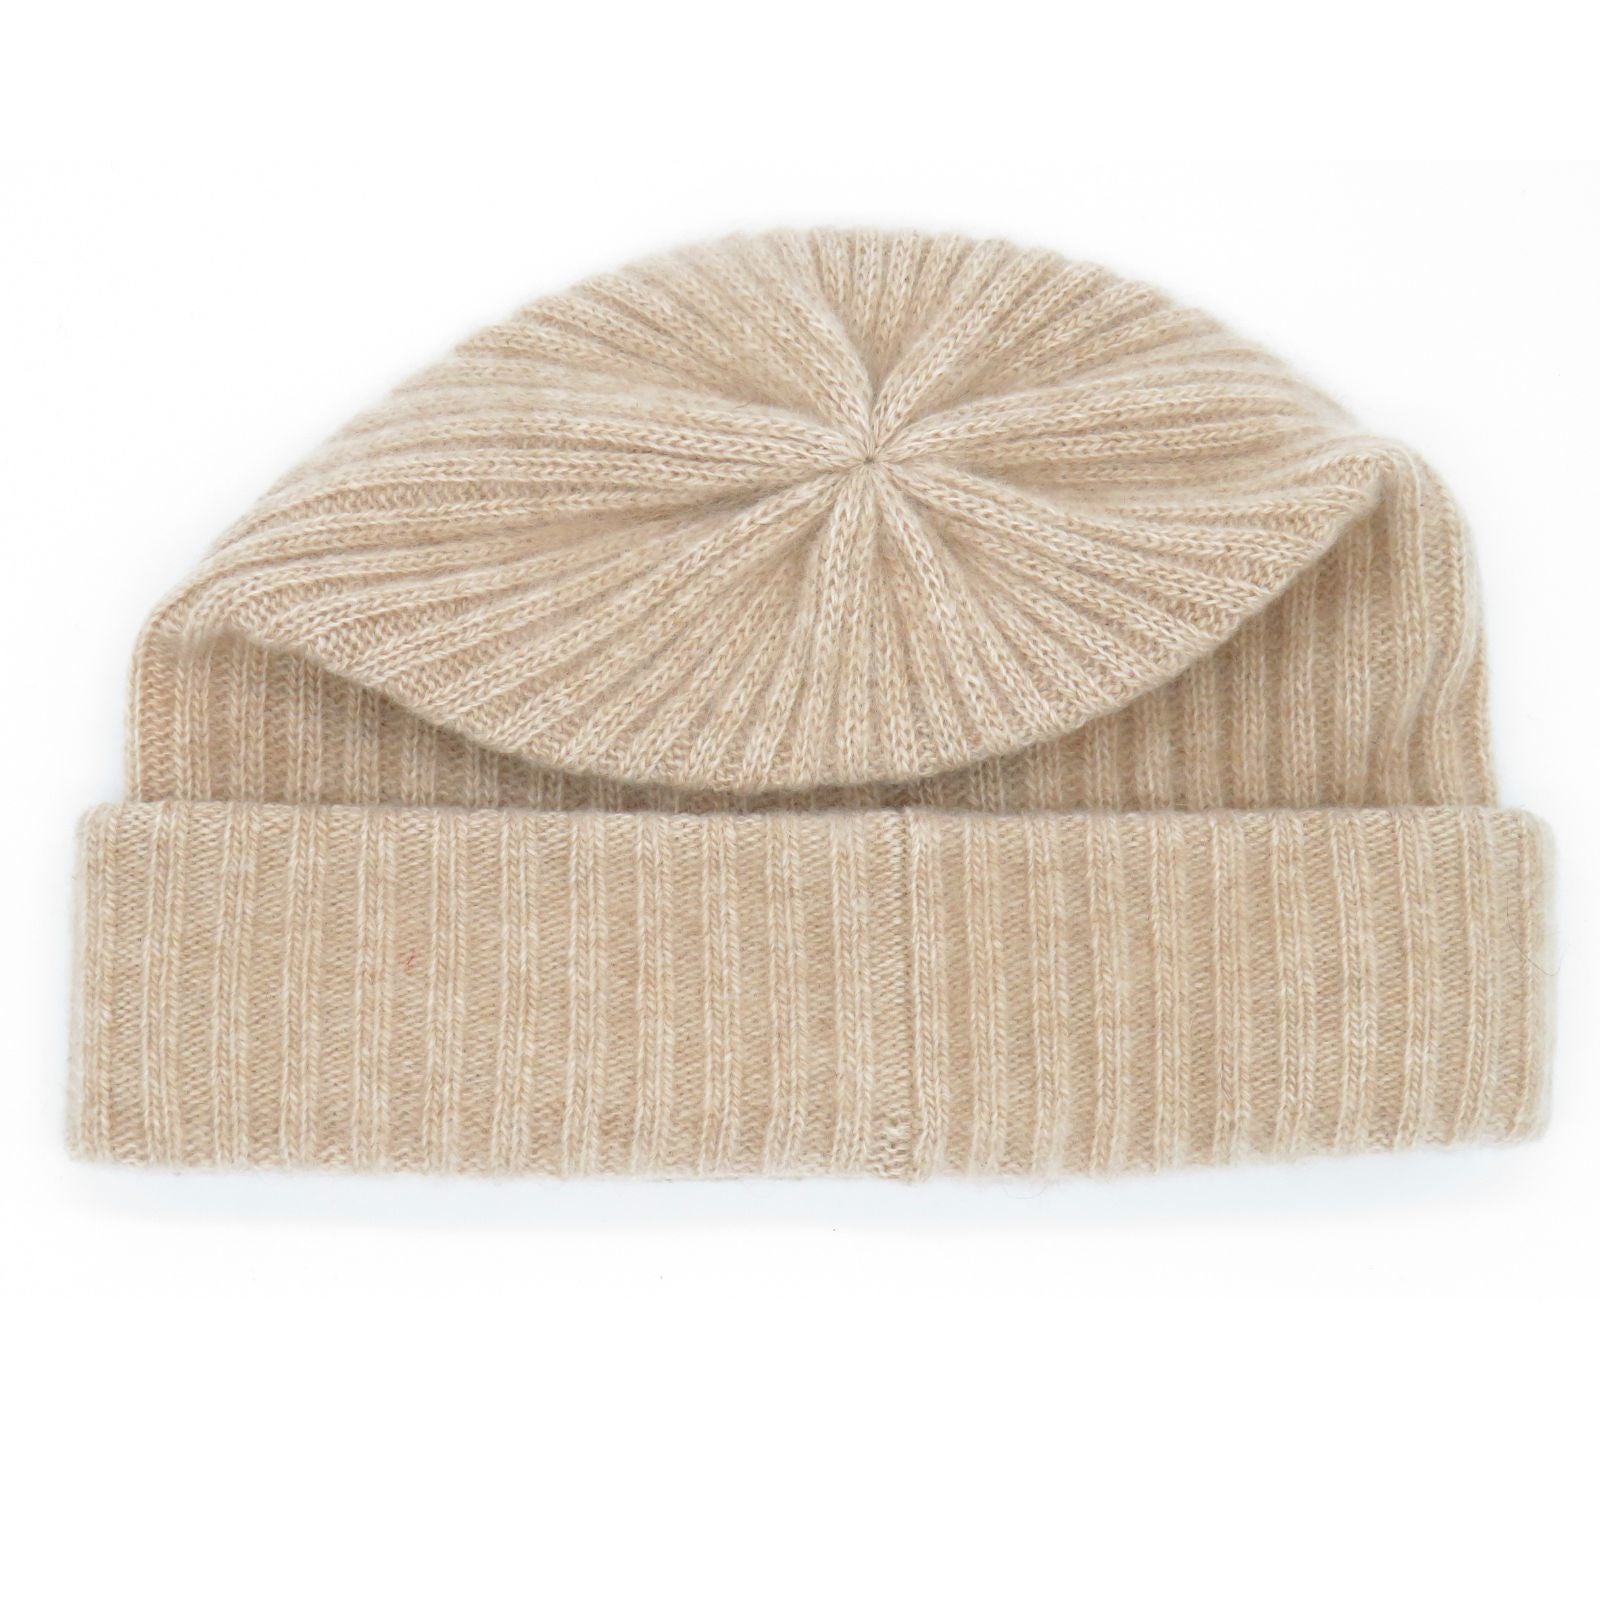 Cashmere hat, unisex fold over hat